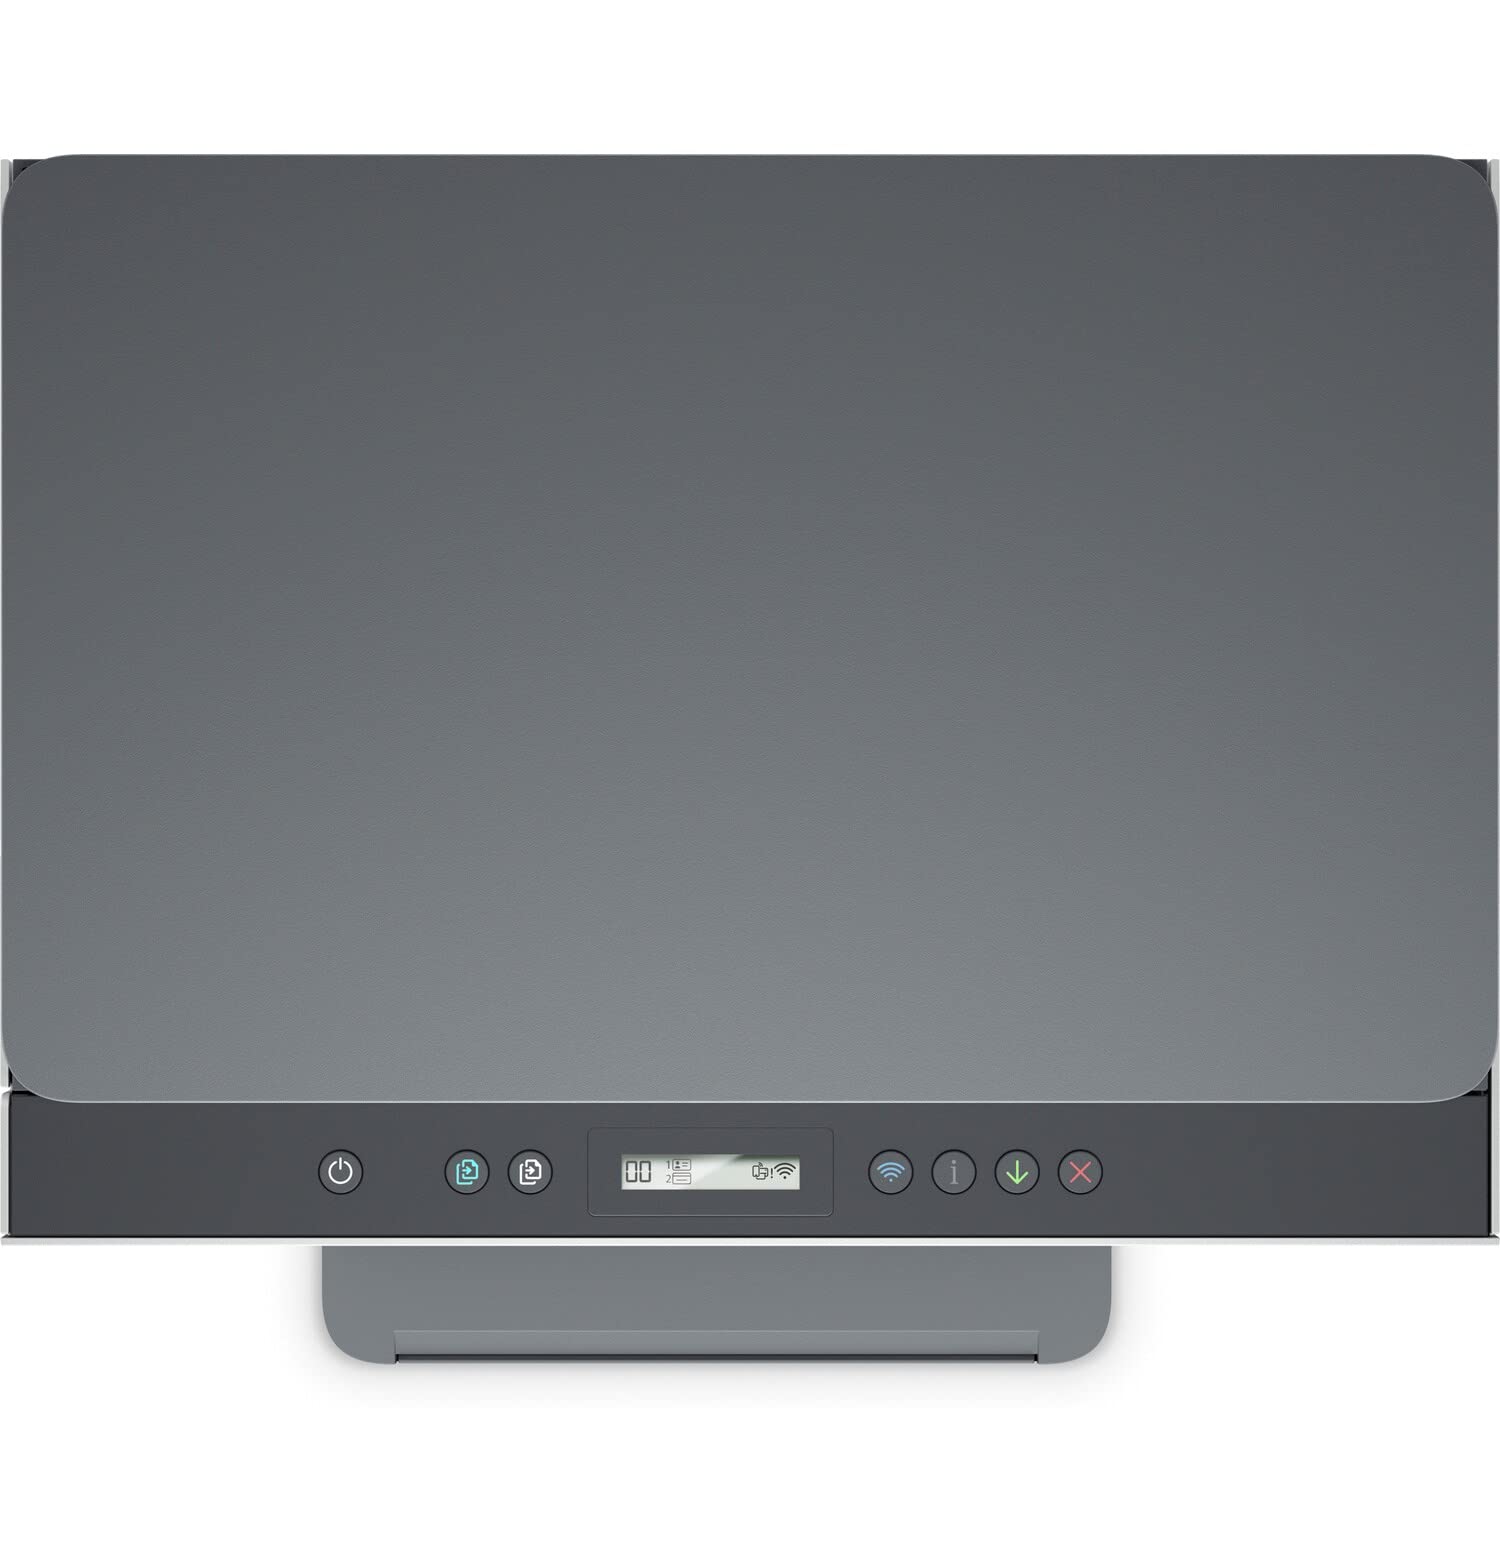 HP Smart -Tank 6001 Wireless All-in-One Printer, Mobile Print, Scan, Copy - 2H0B9A (Renewed)